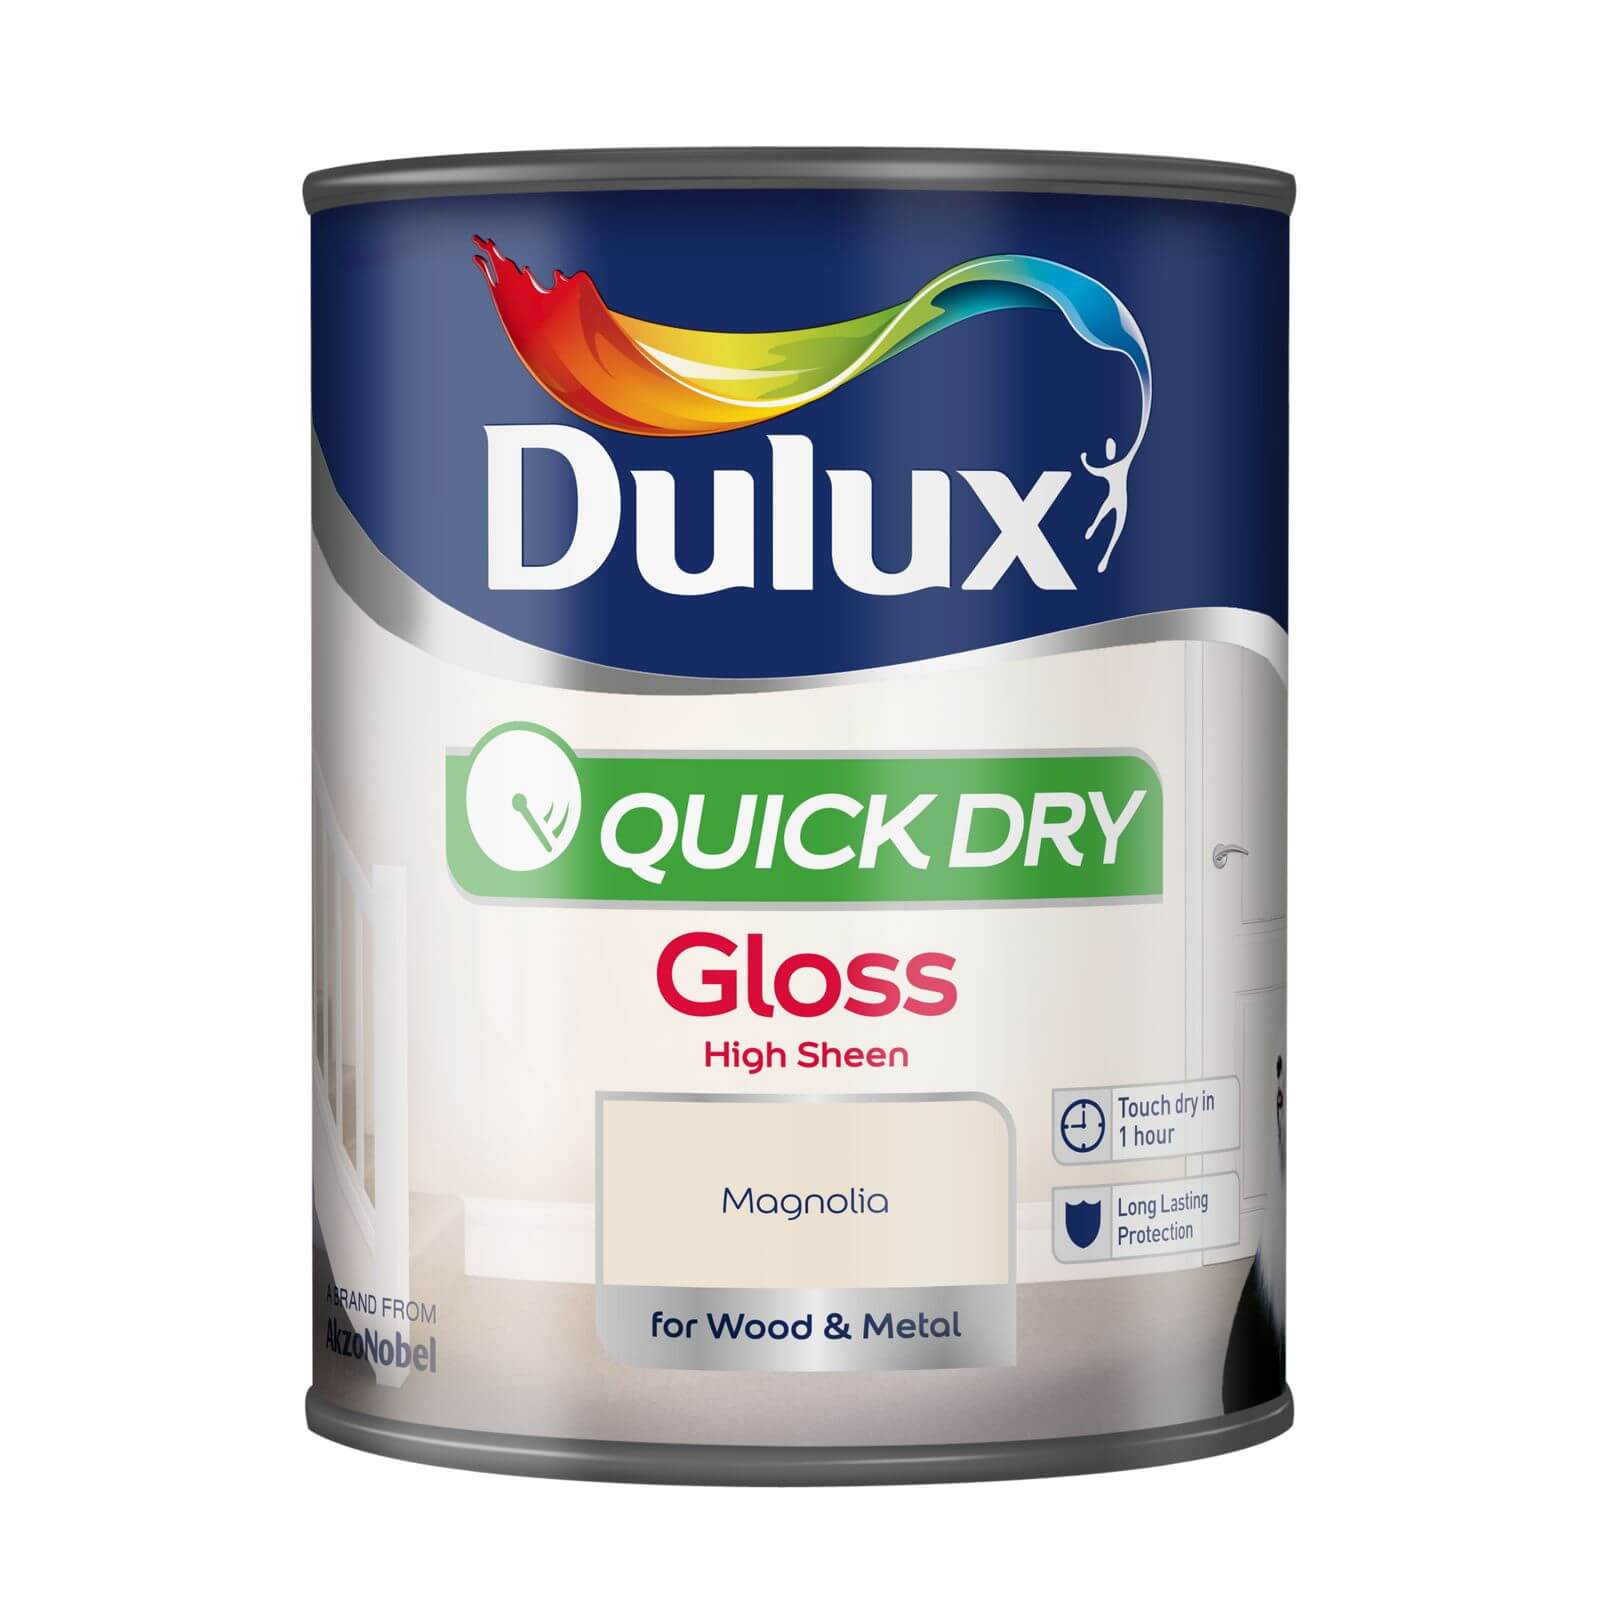 Dulux Quick Dry Gloss Paint Magnolia - 750ml